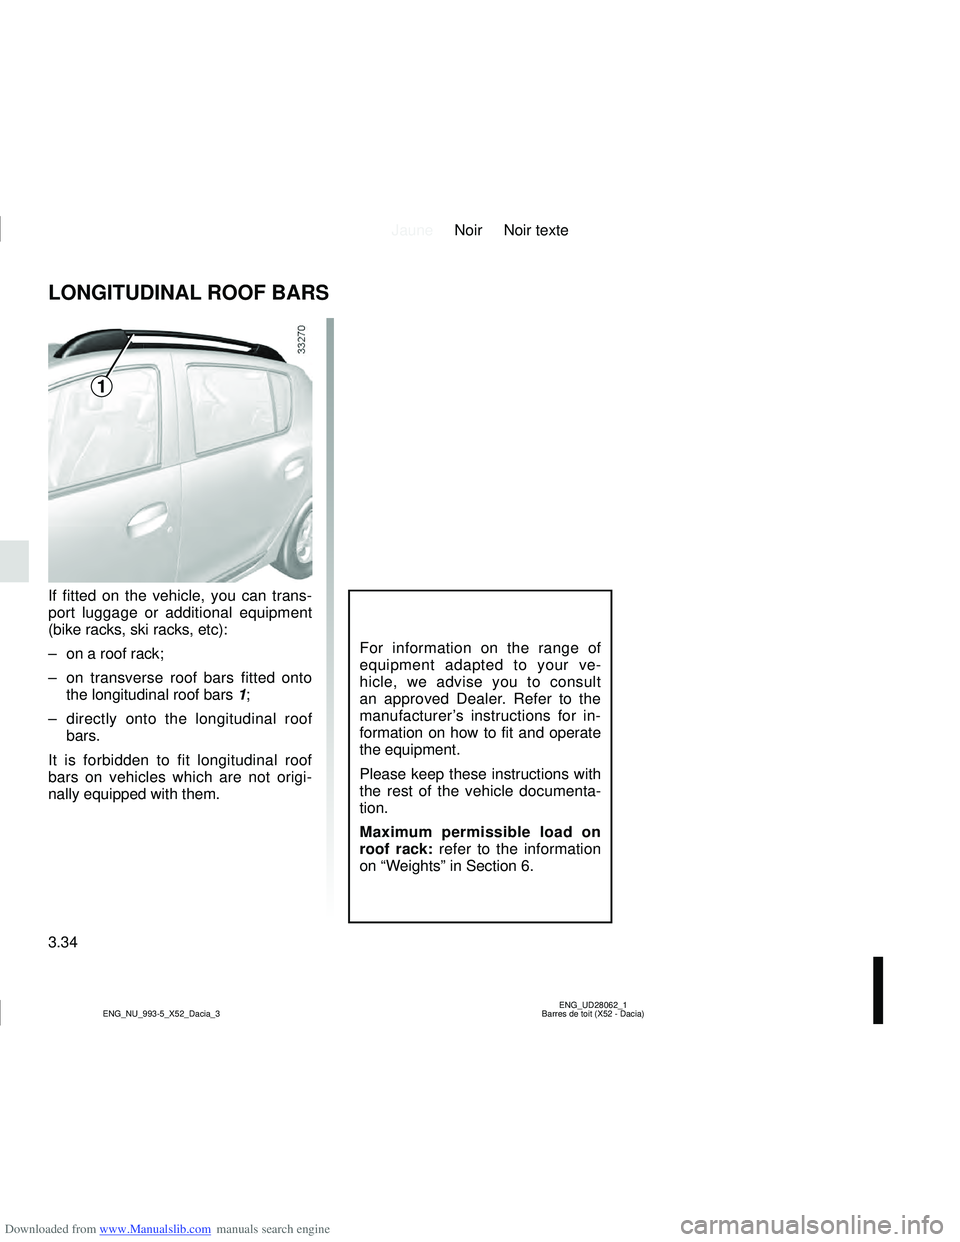 DACIA LOGAN 2015  Owners Manual Downloaded from www.Manualslib.com manuals search engine JauneNoir Noir texte
3.34
ENG_UD28062_1
Barres de toit (X52 - Dacia)
ENG_NU_993-5_X52_Dacia_3
LONGITUDINAL ROOF BARS
For information on the ran